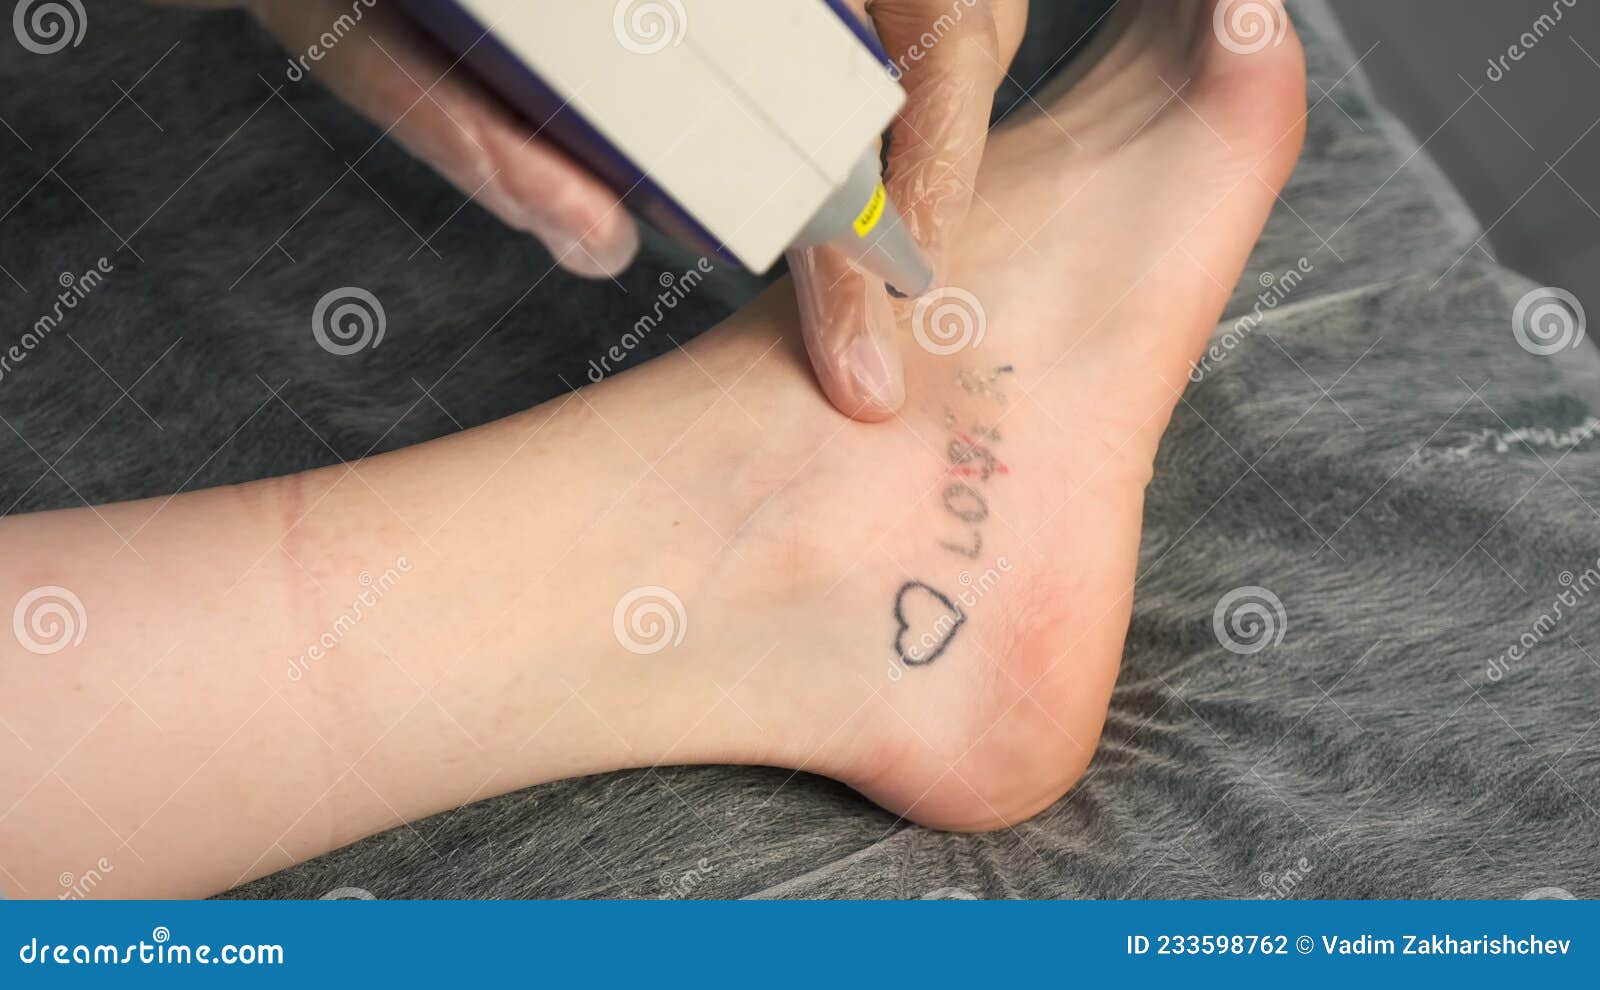 101 Best Wording Tattoos On Foot